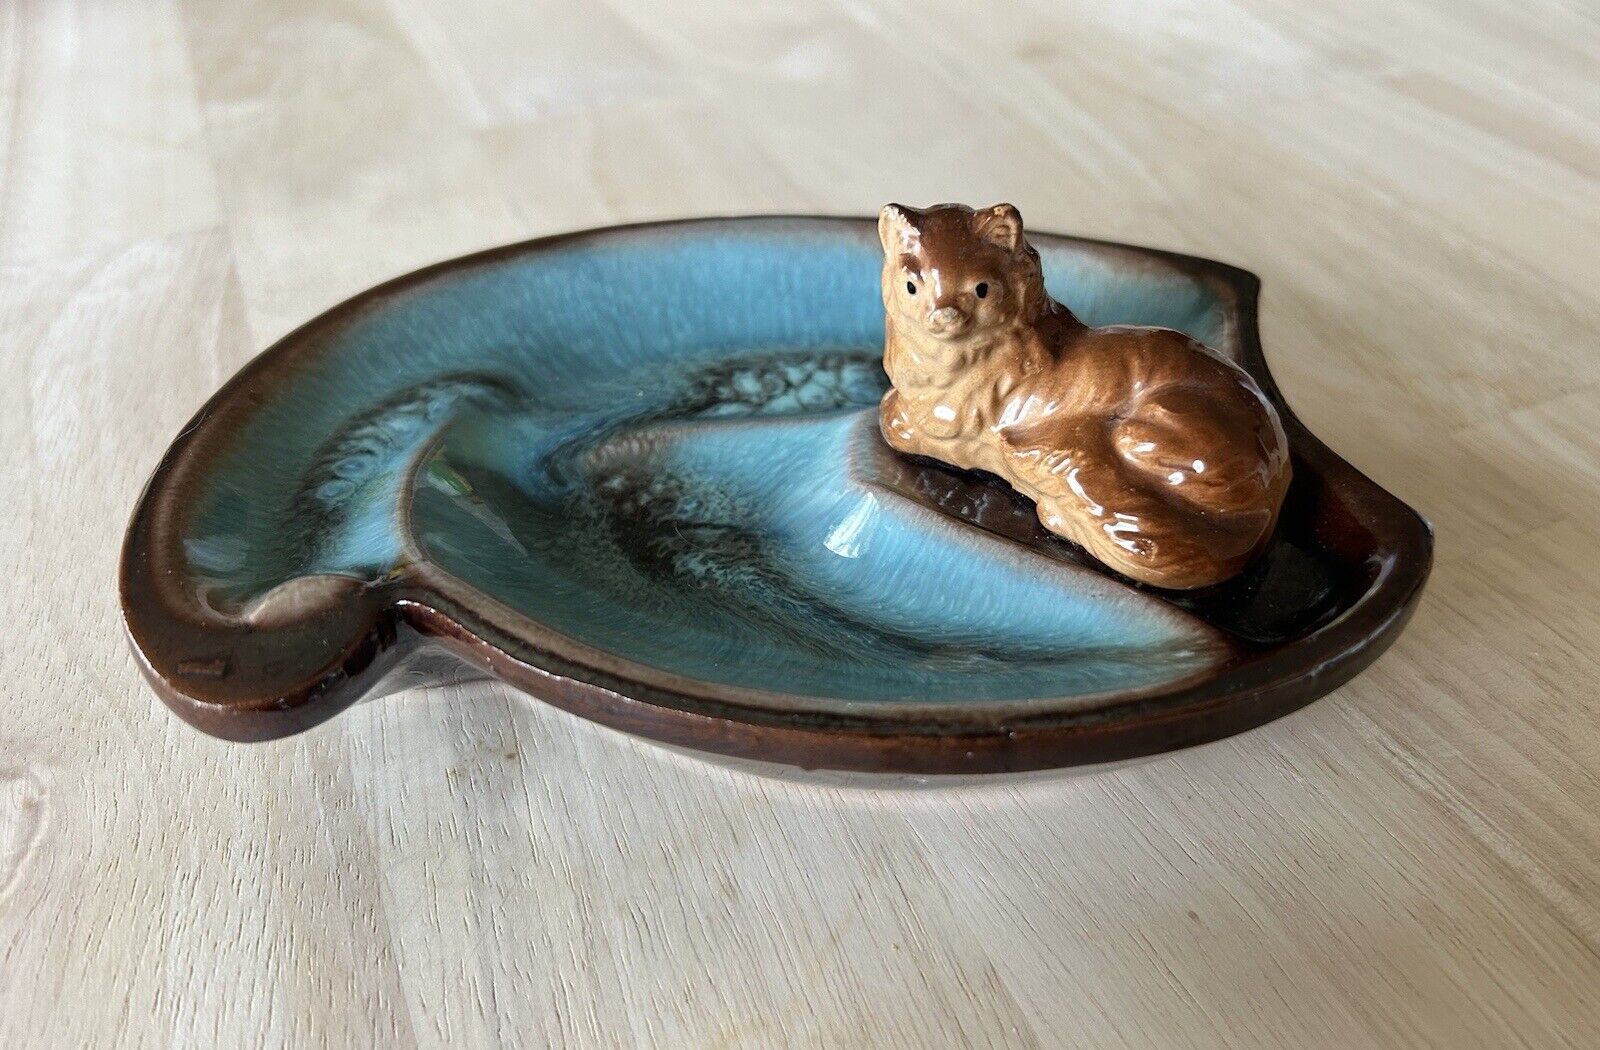 Vintage Brinn's Ceramic Brown Teal Trinket Dish Ashtray, Cat, Drip Glaze